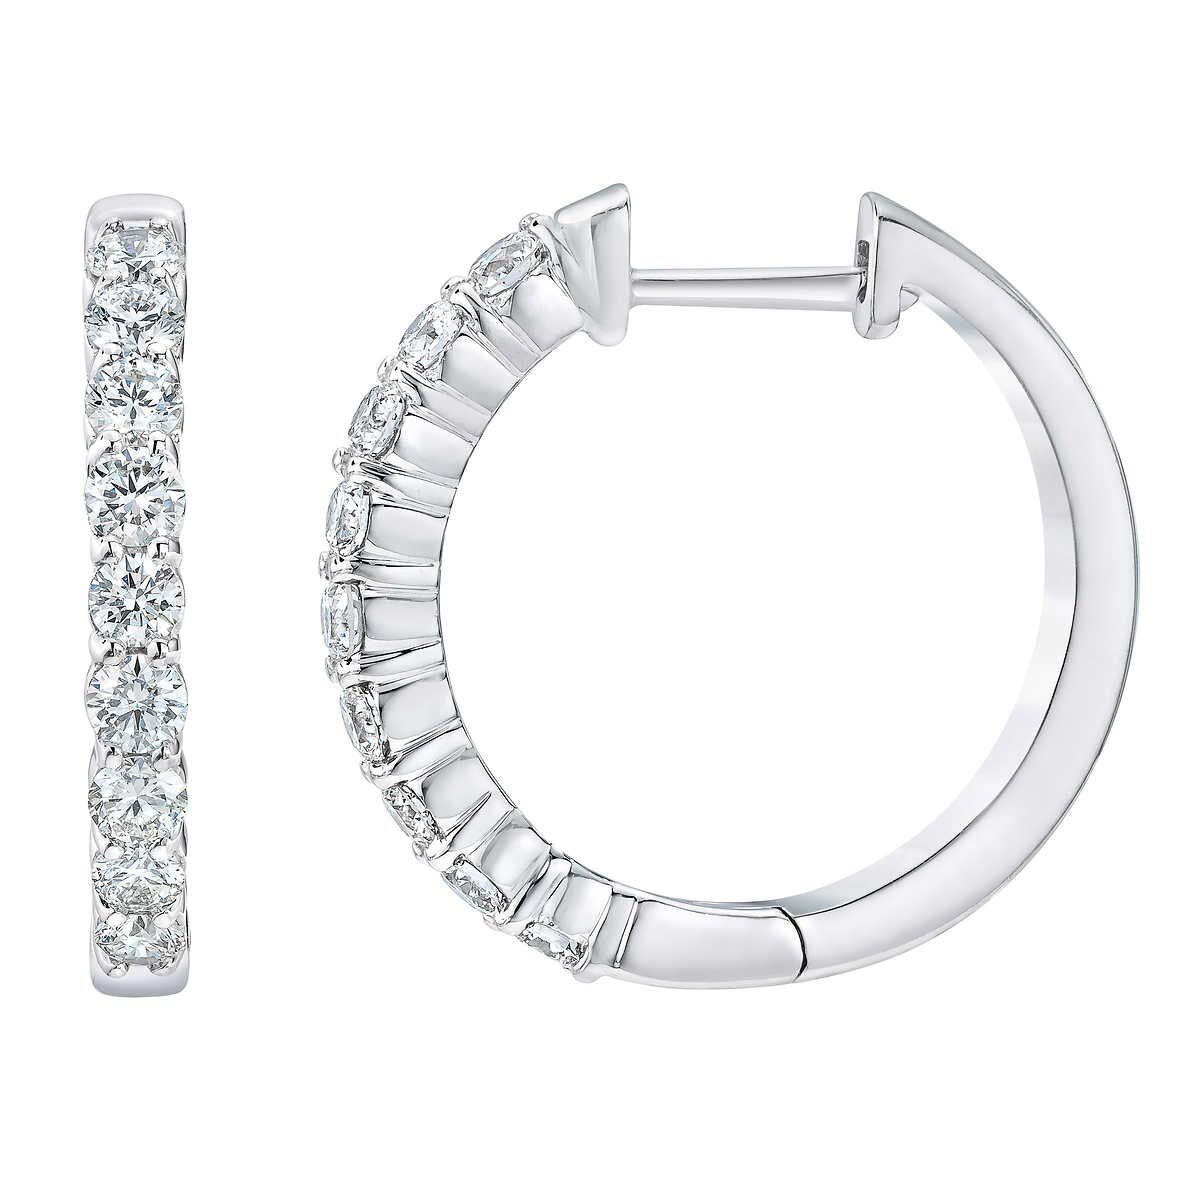 Round Brilliant 1.00 ctw VS2 Clarity, I Color Diamond 14kt White Gold Hoop Earrings